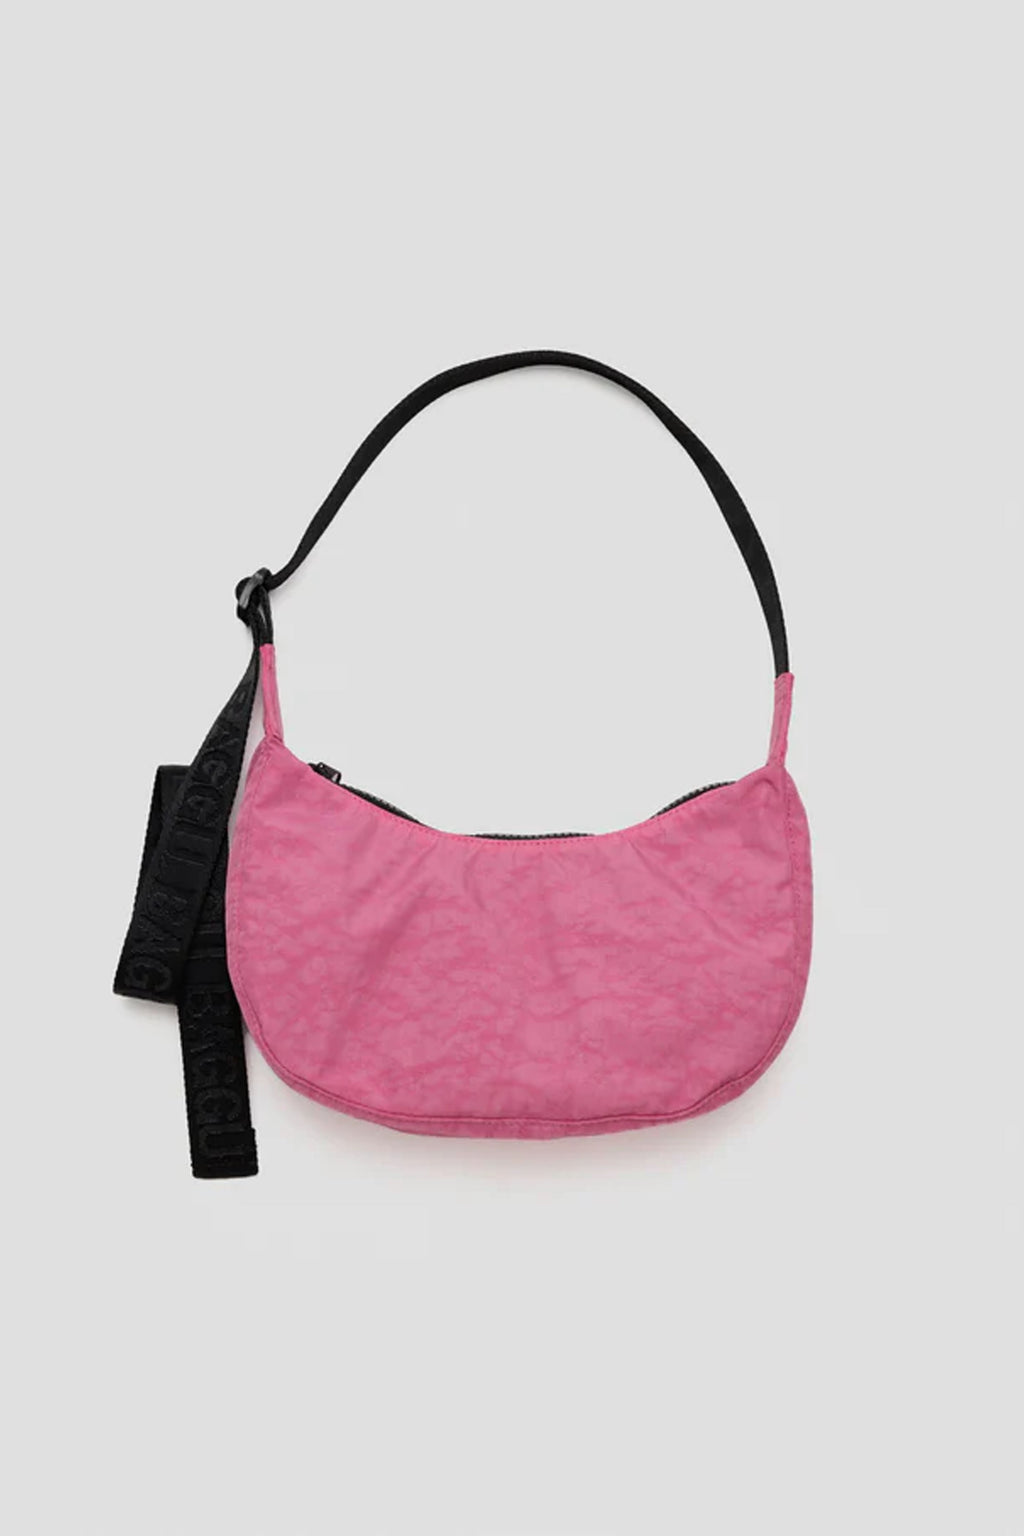 Baggu Small Crescent Azalea Pink Bag - The Mercantile London